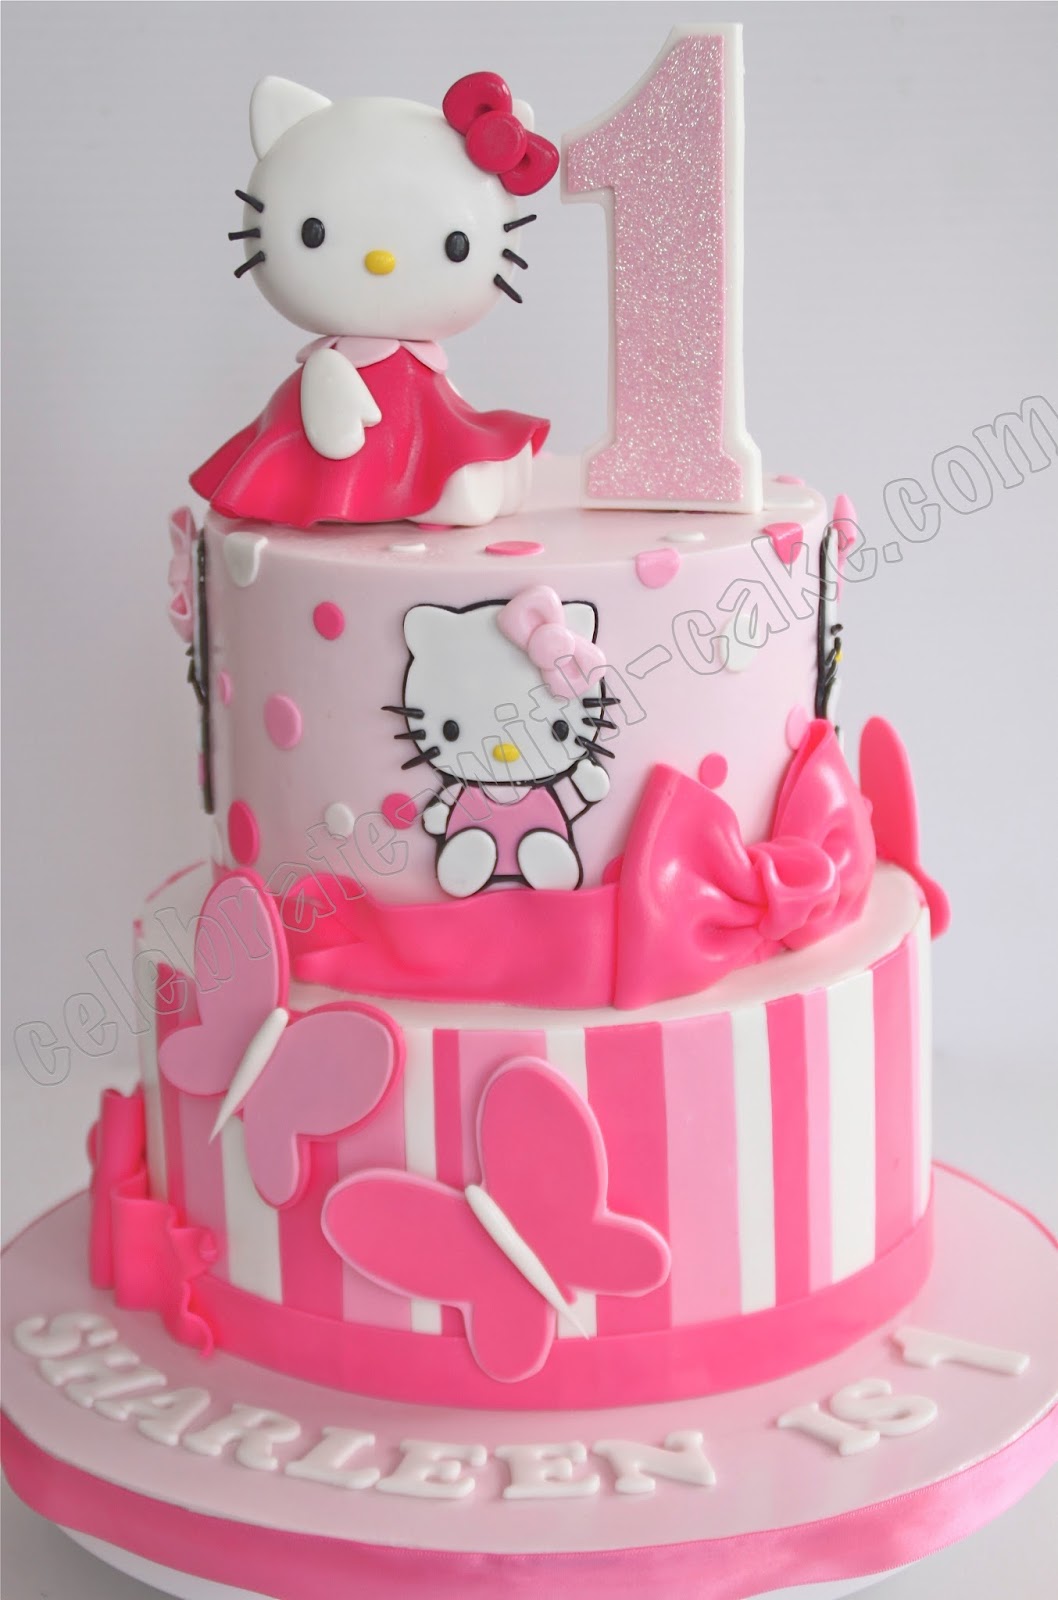 Celebrate with Cake!: 1st Birthday Hello Kitty Tier Cake